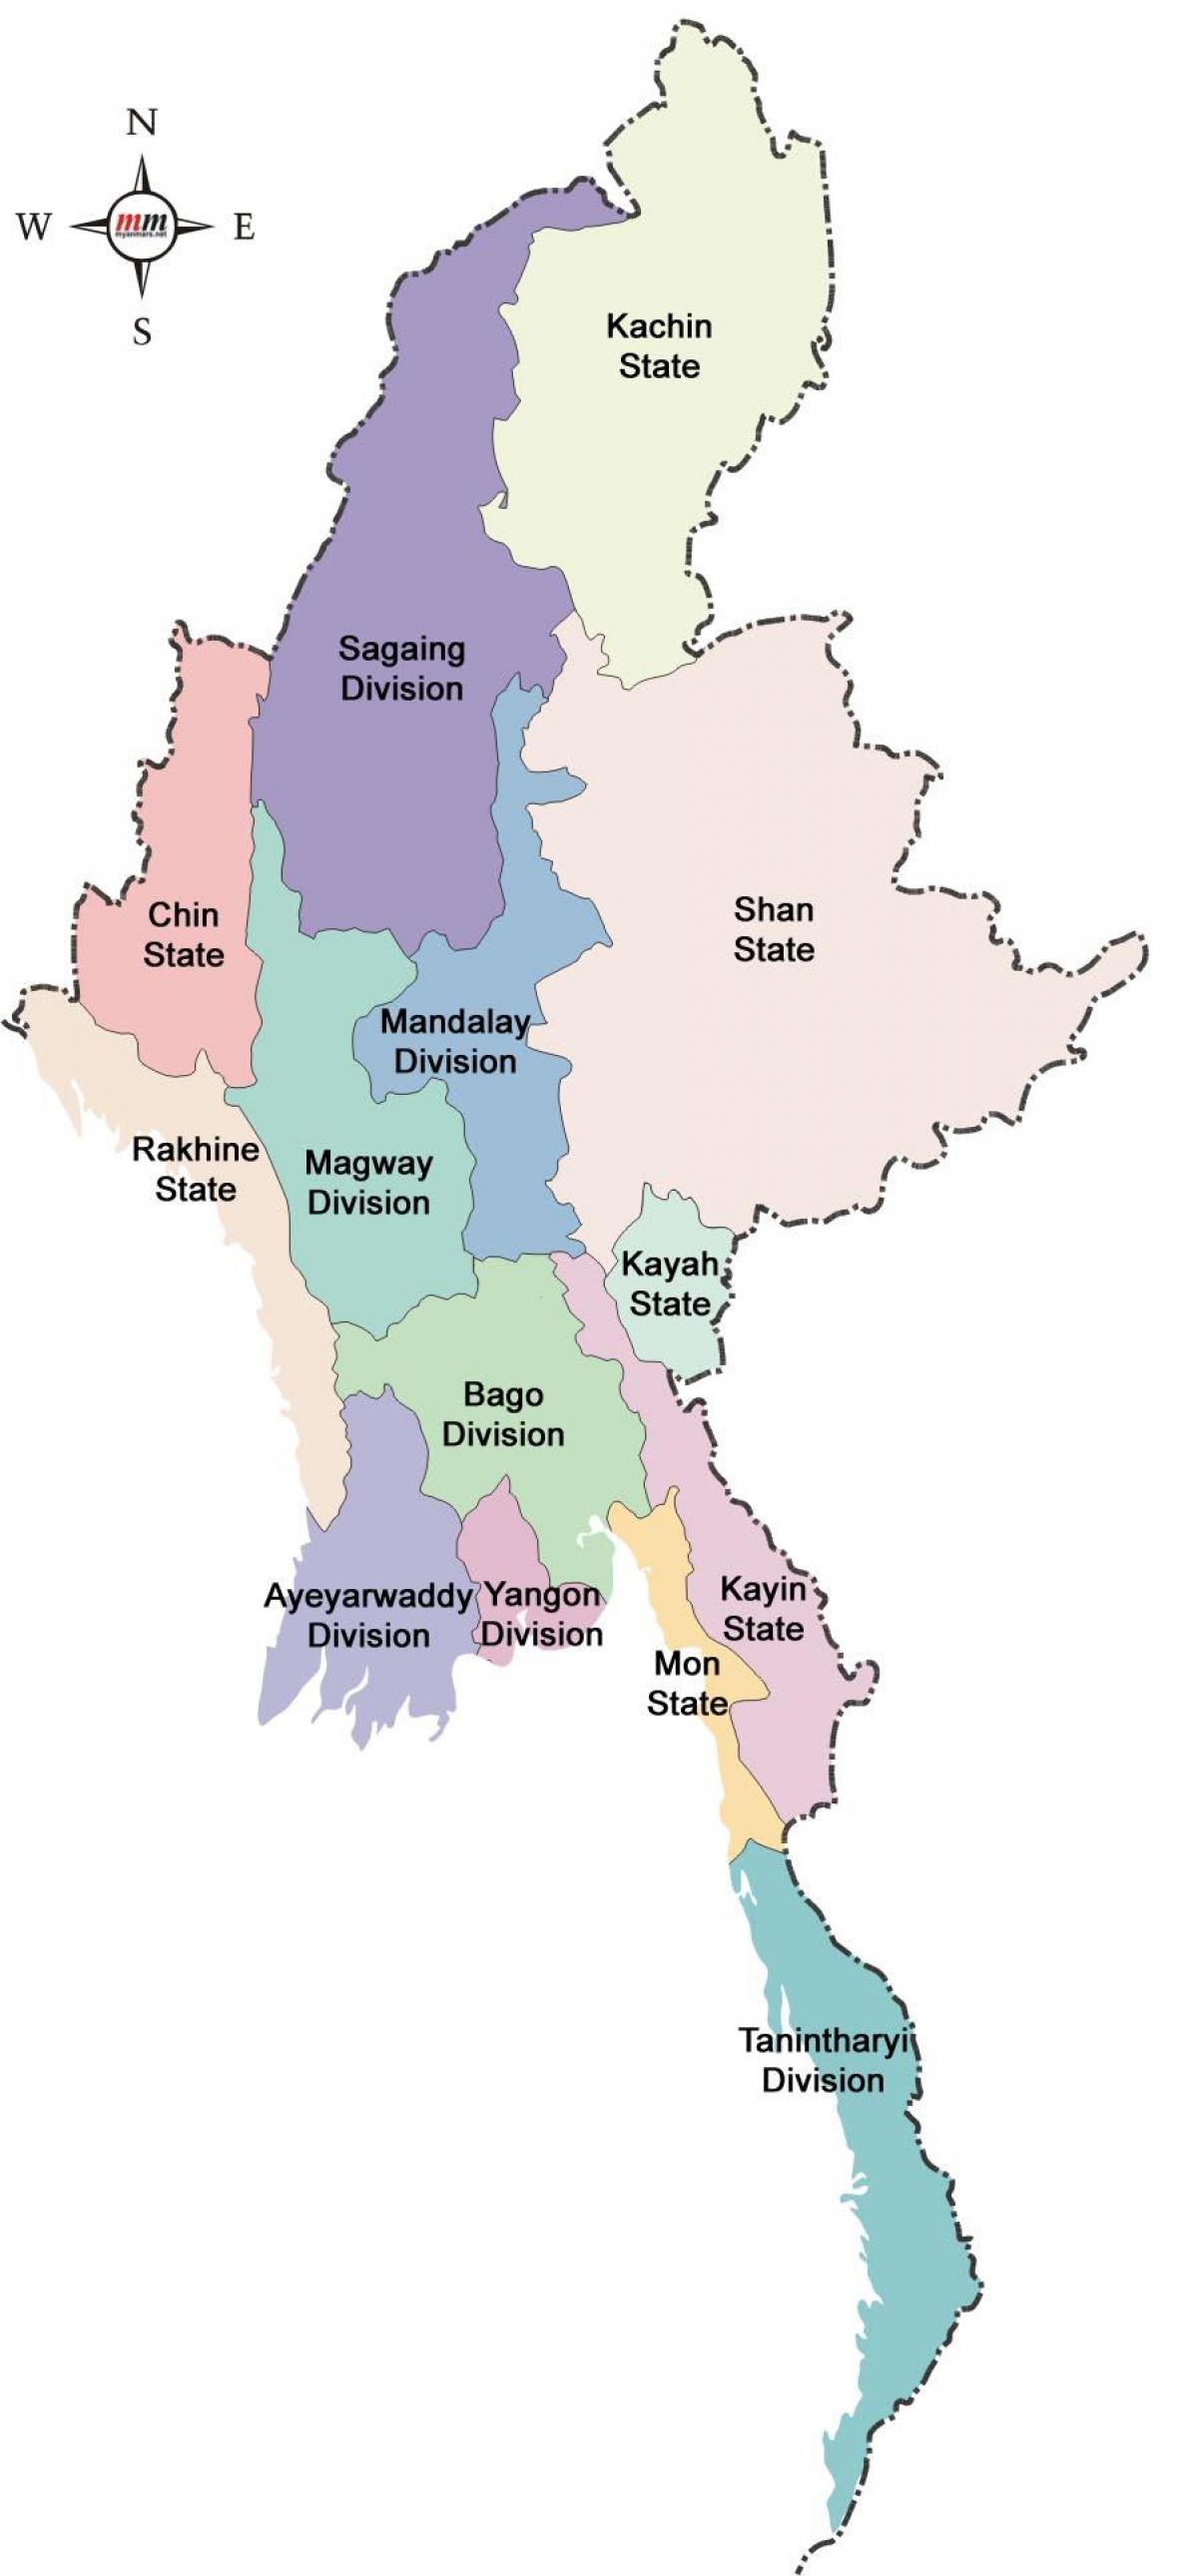 Mjanmas karte un valstis